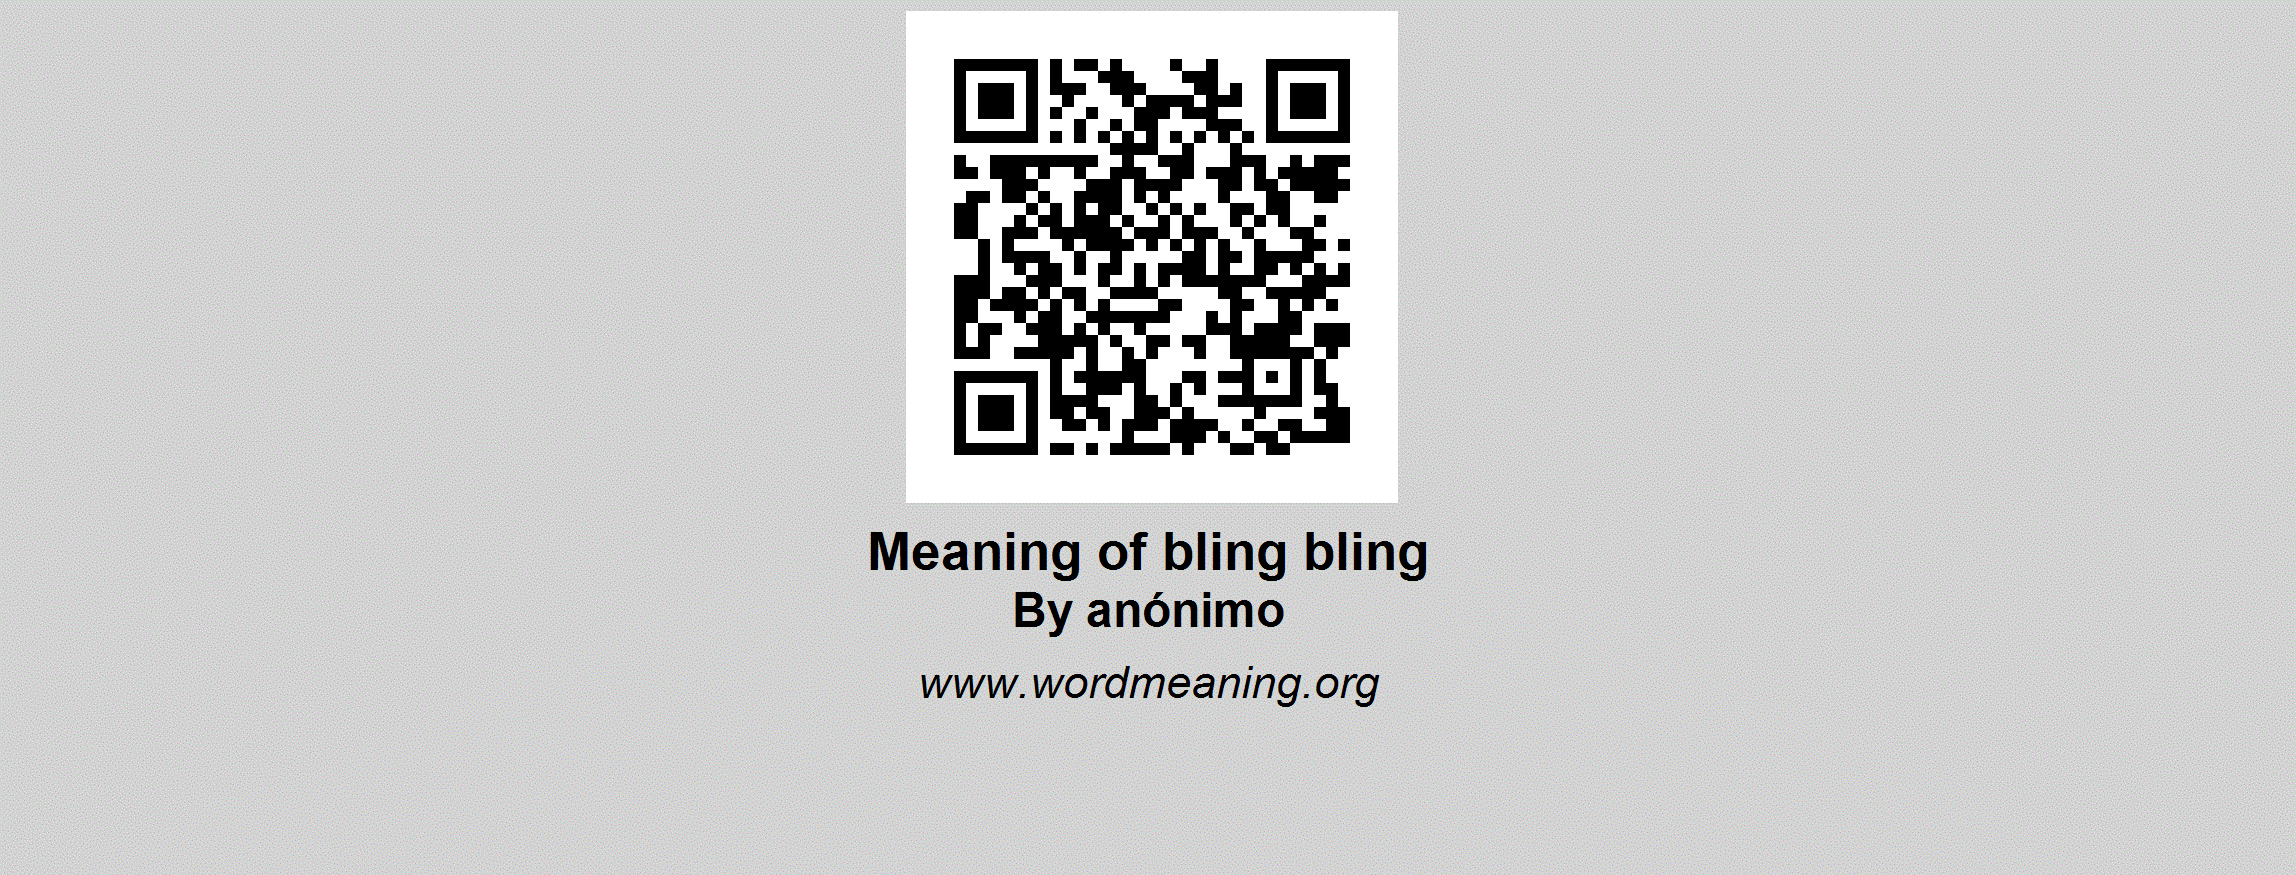 Bling Bling Meaning Of Bling Bling By Anonimo